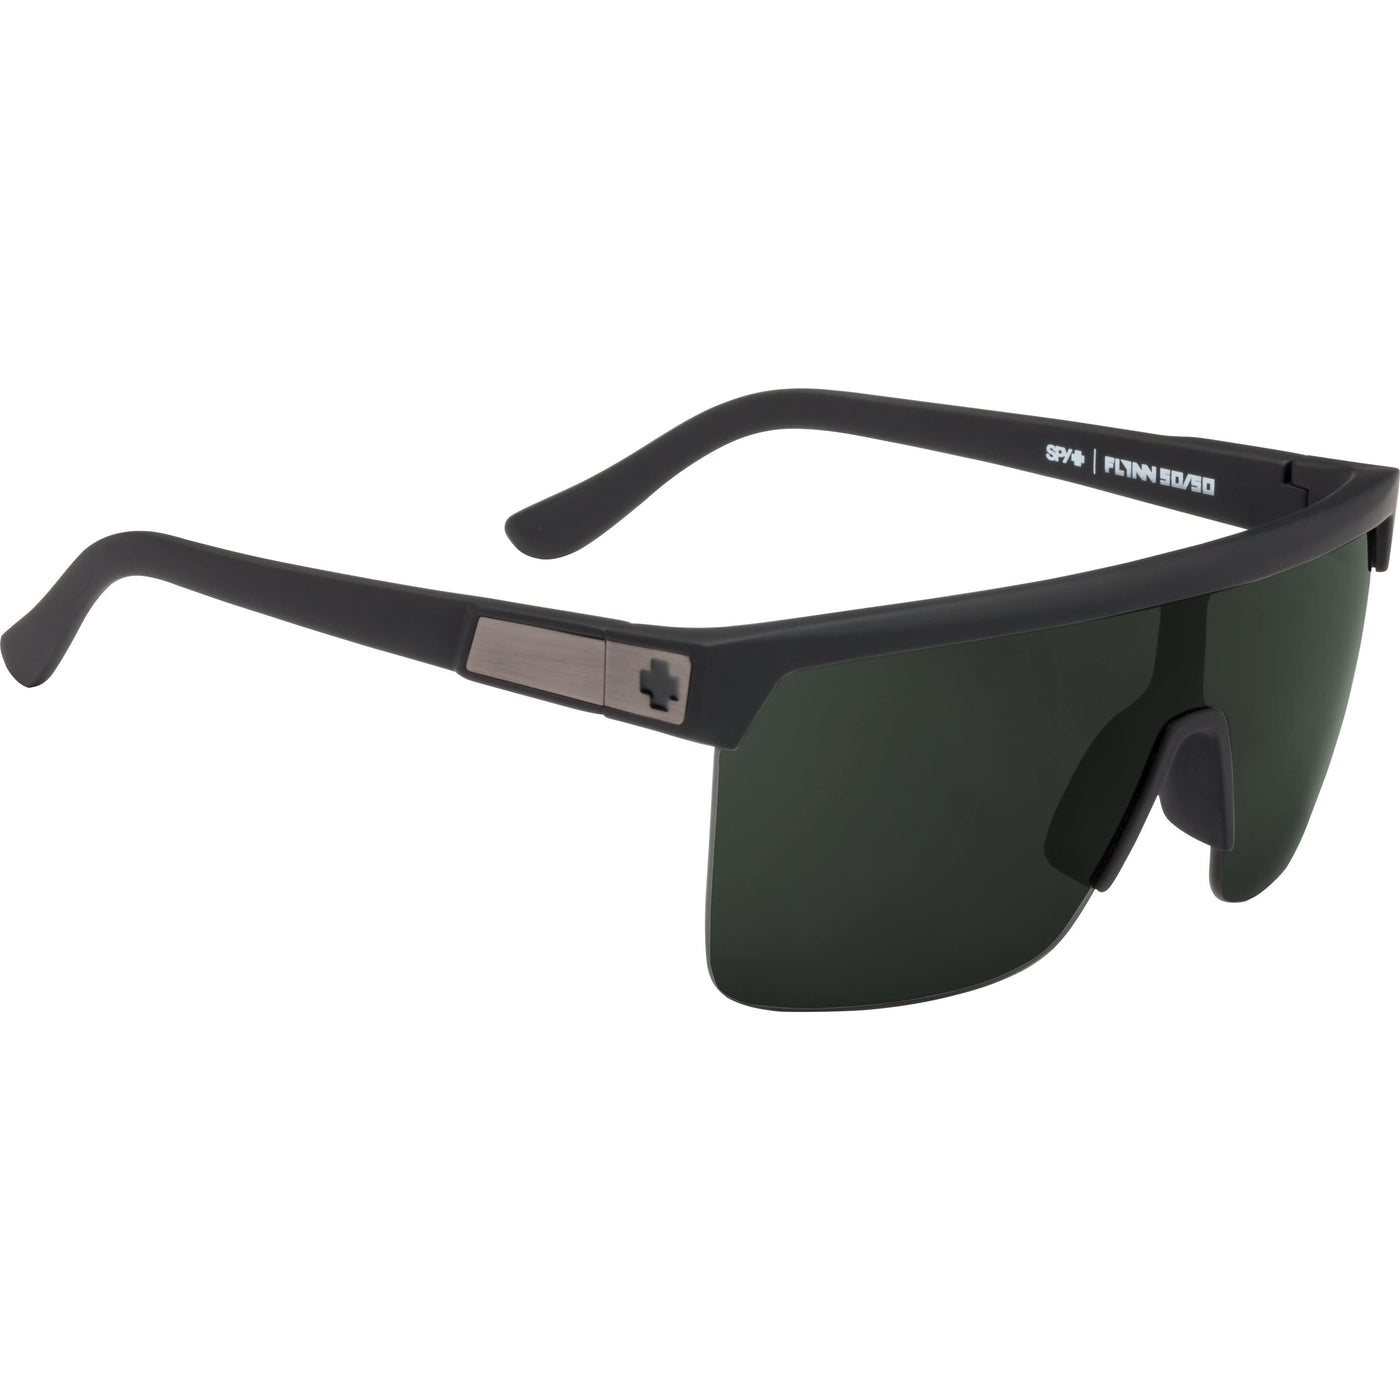 SPY FLYNN 5050 Sunglasses, Happy Lens - Gray/Green 8Lines Shop - Fast Shipping